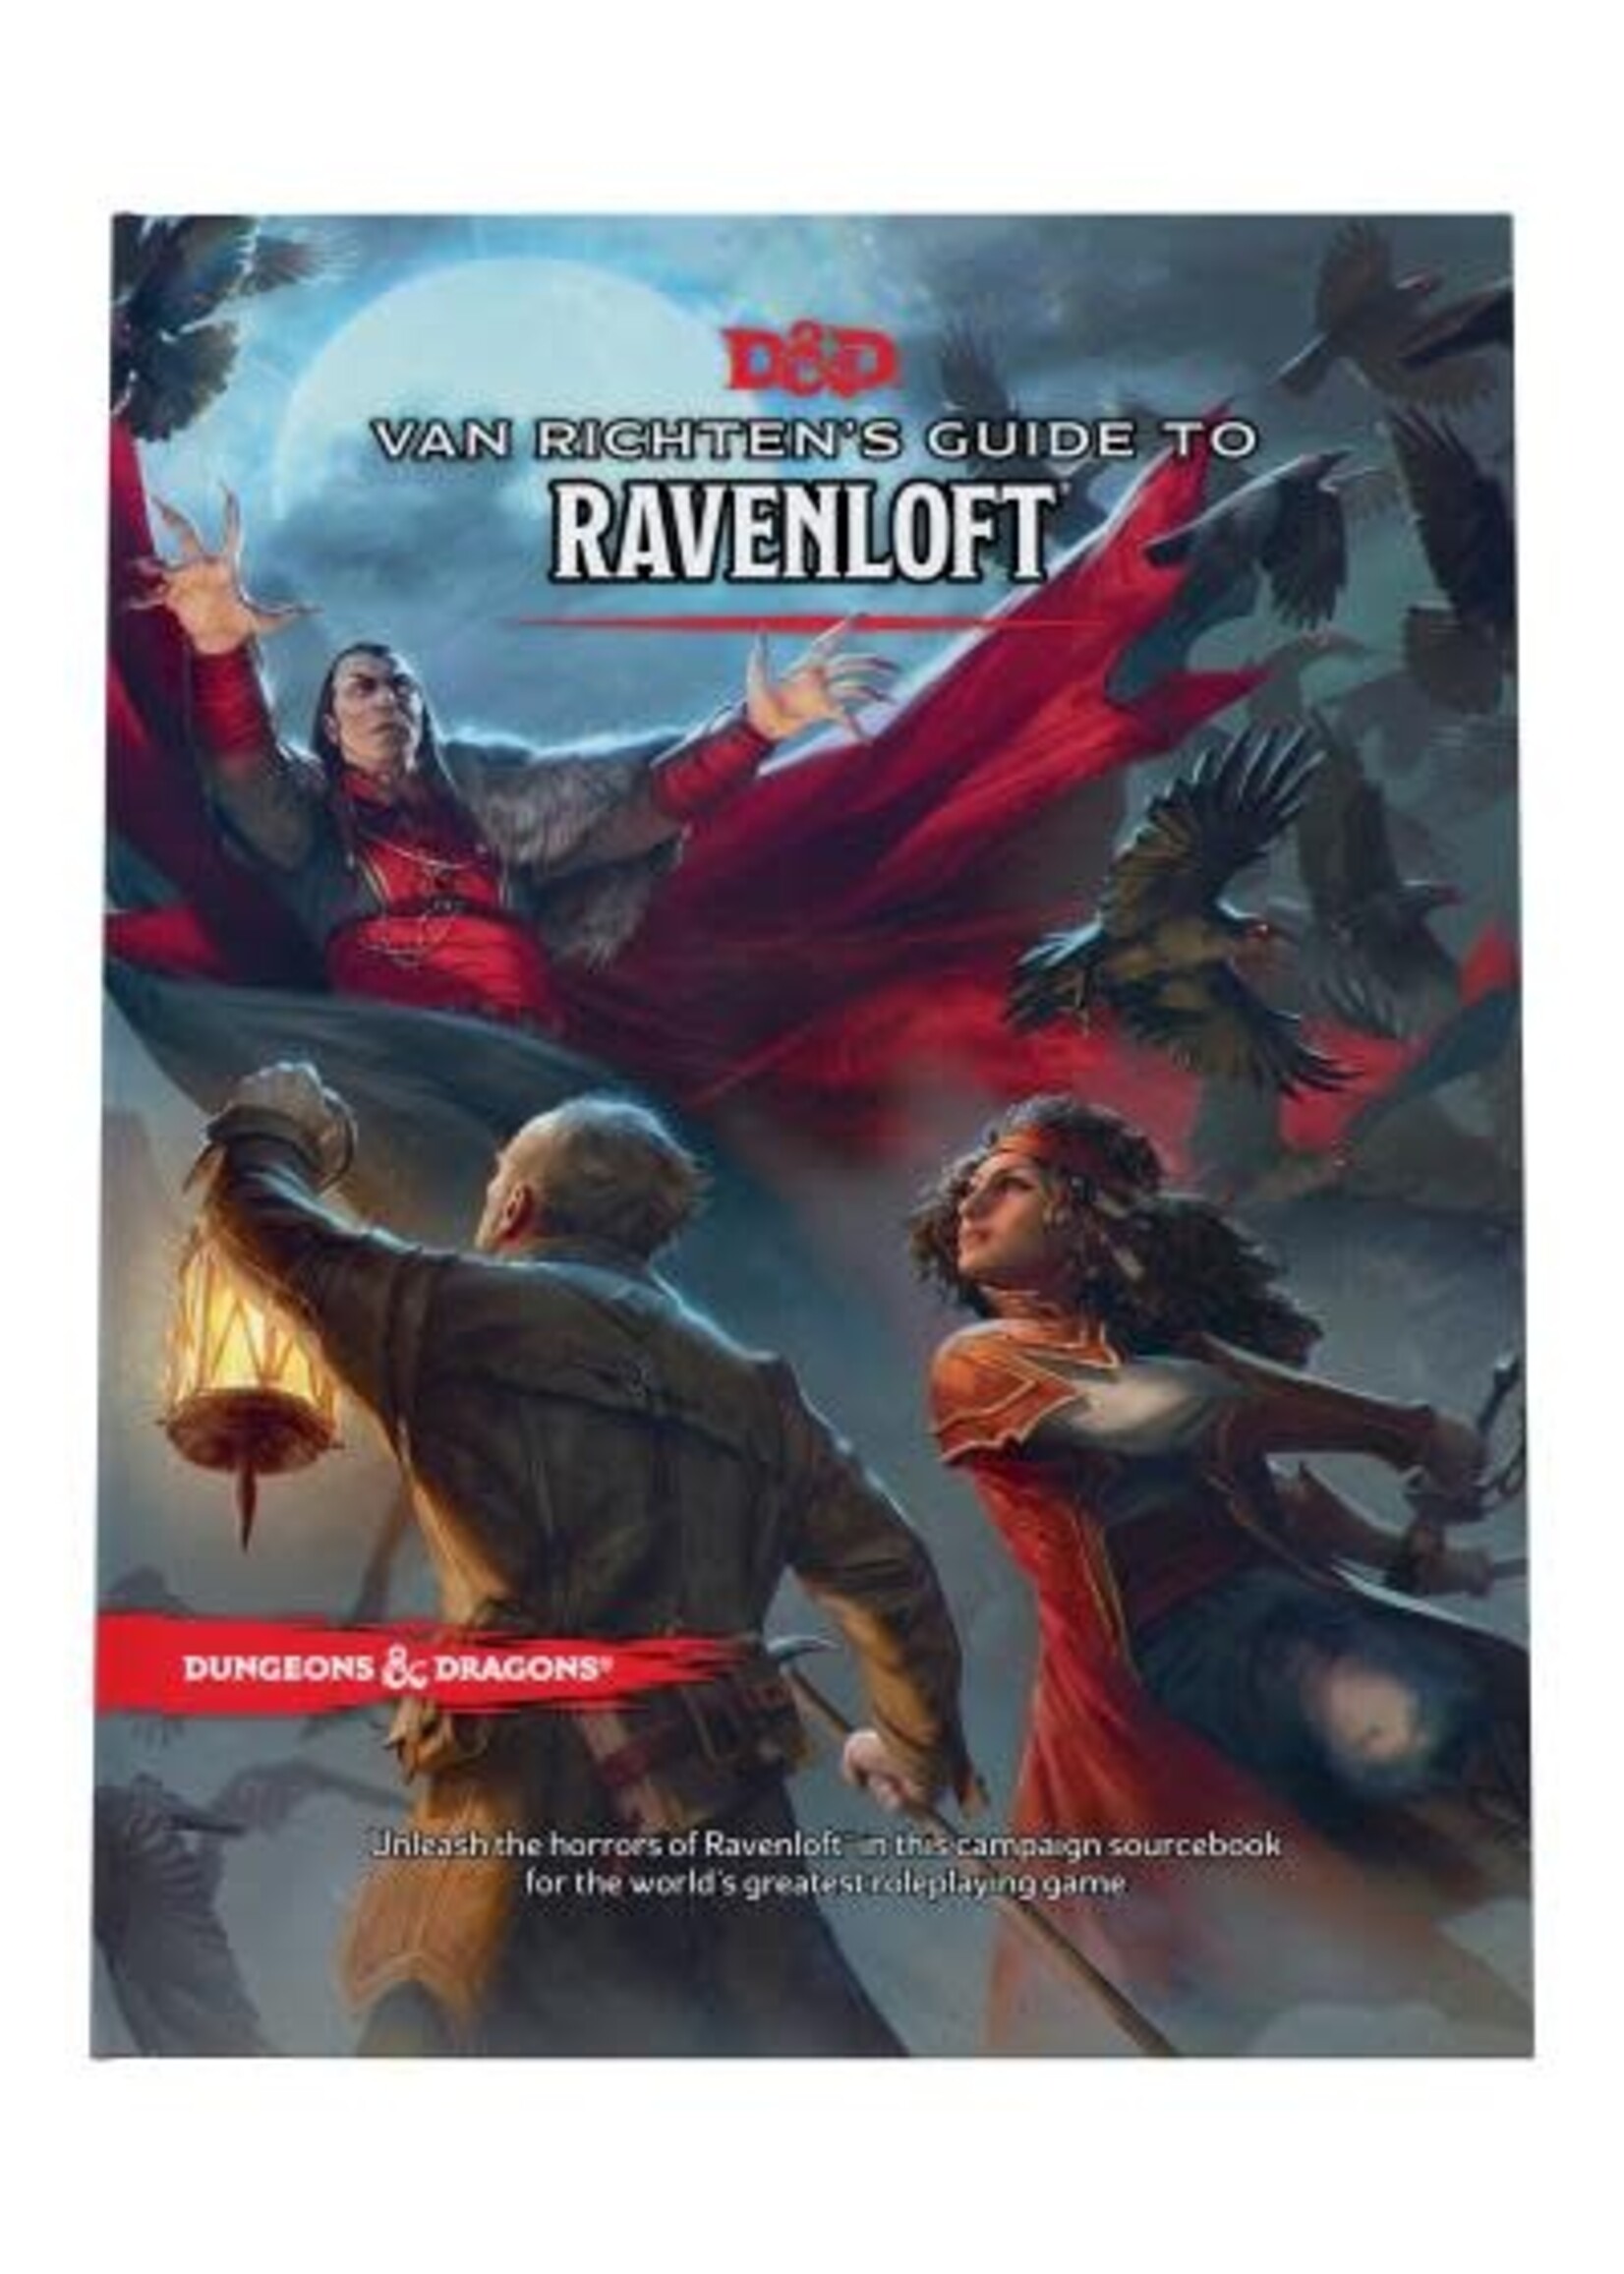 Van Richten's Guide to Ravenloft (Dungeons & Dragons 5e) by Dungeons & Dragons